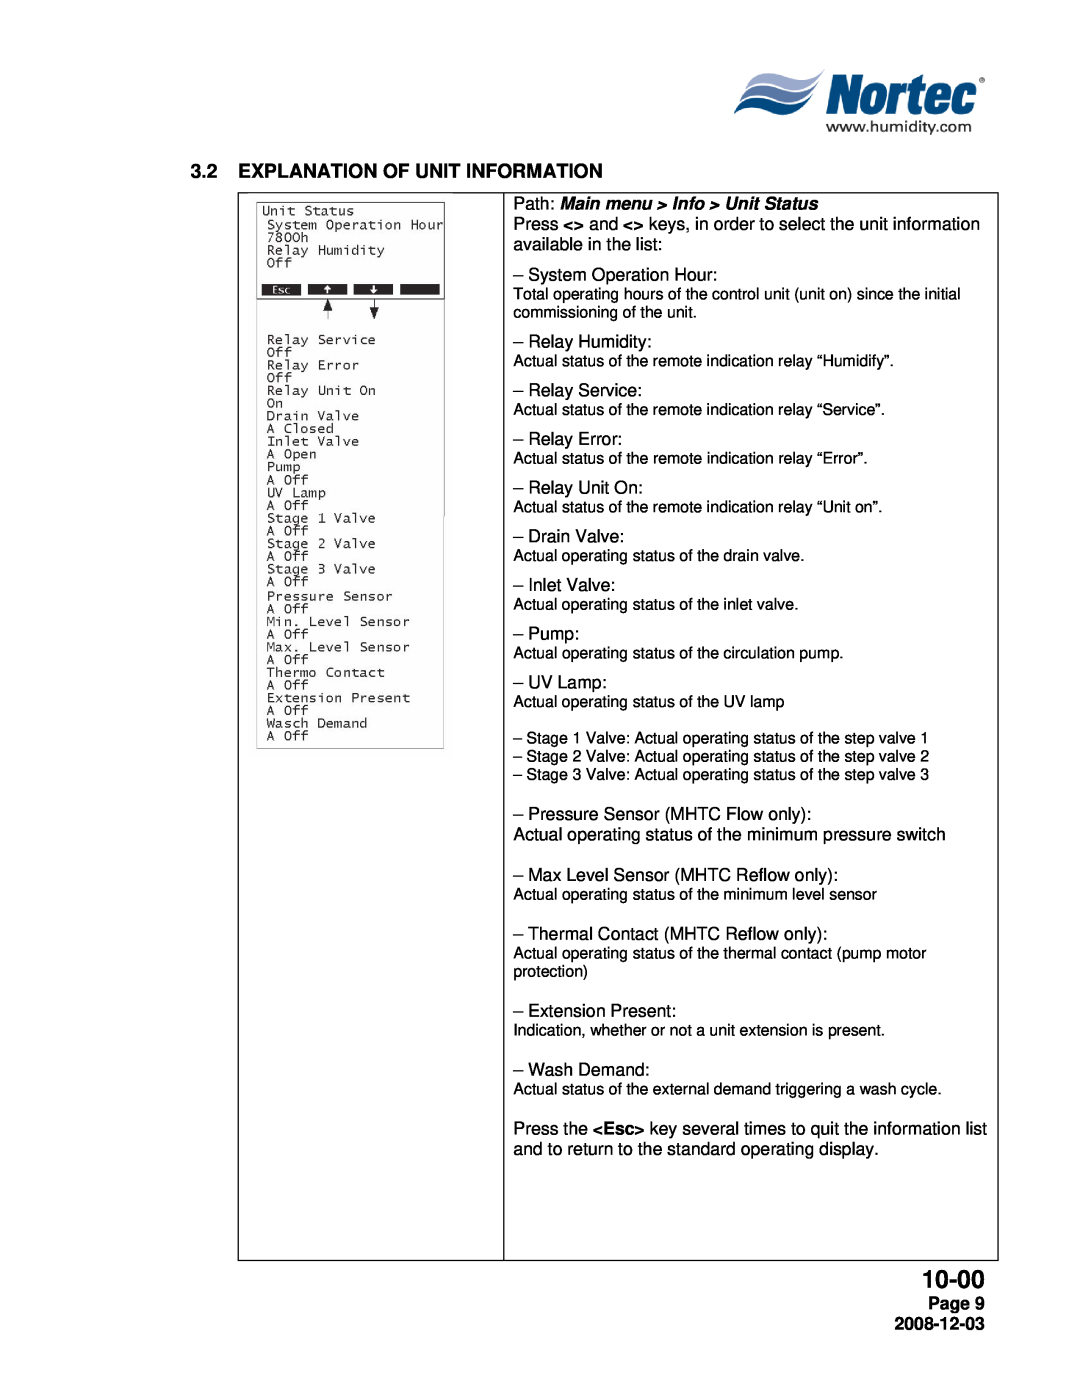 Nortec MH Series installation manual 3.2EXPLANATION OF UNIT INFORMATION, 10-00, Path Main menu Info Unit Status, Page 